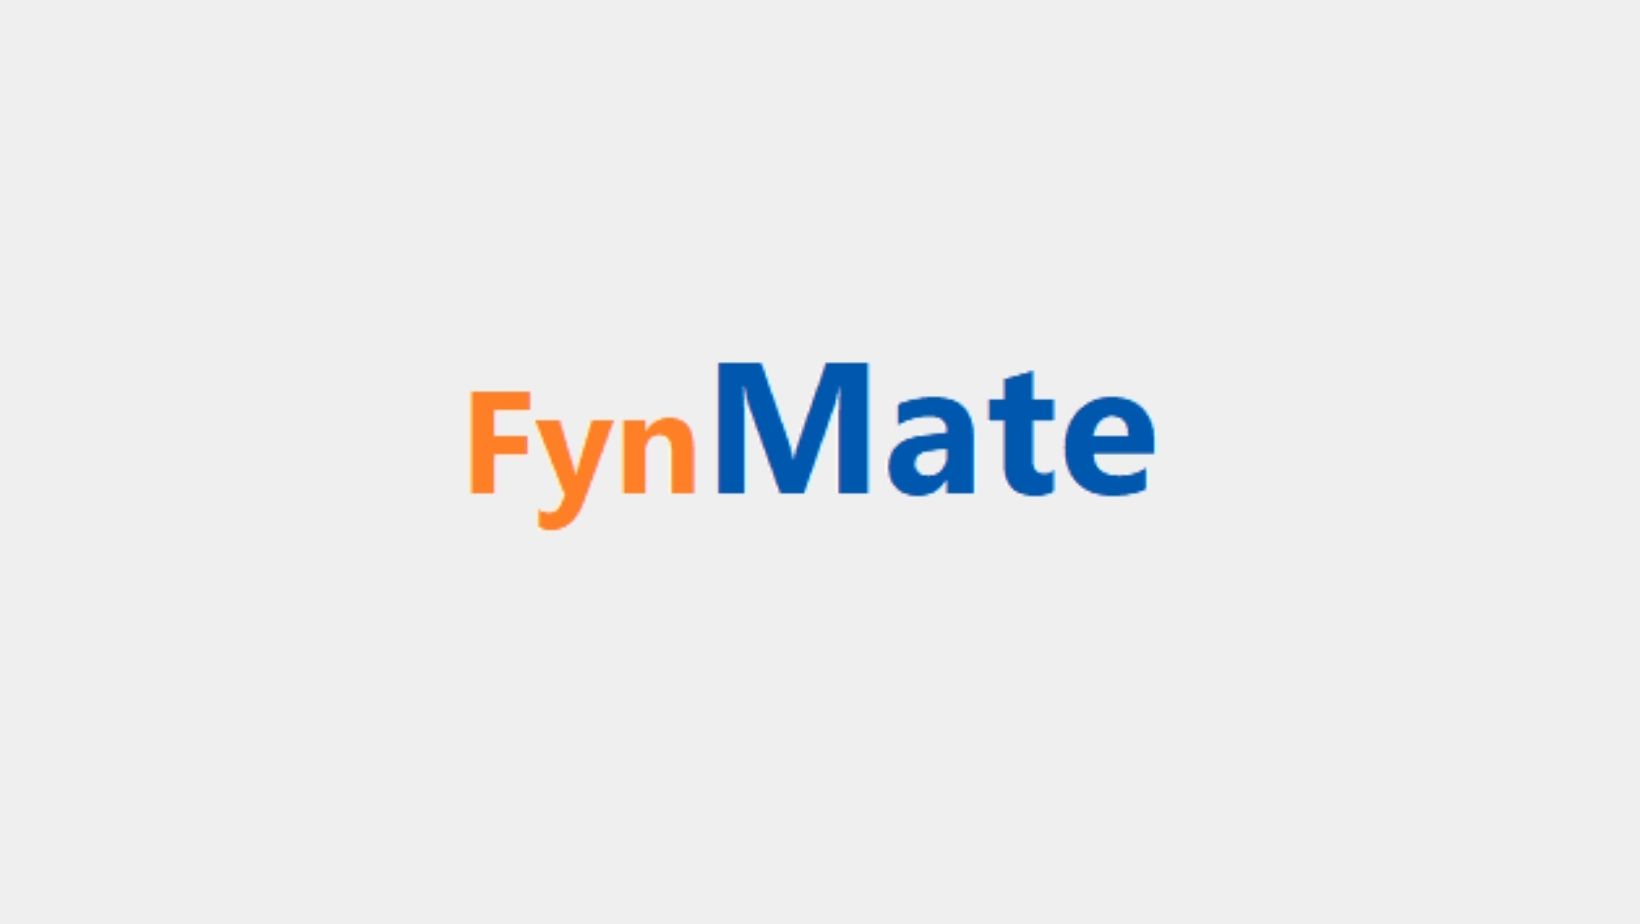 Fynmate